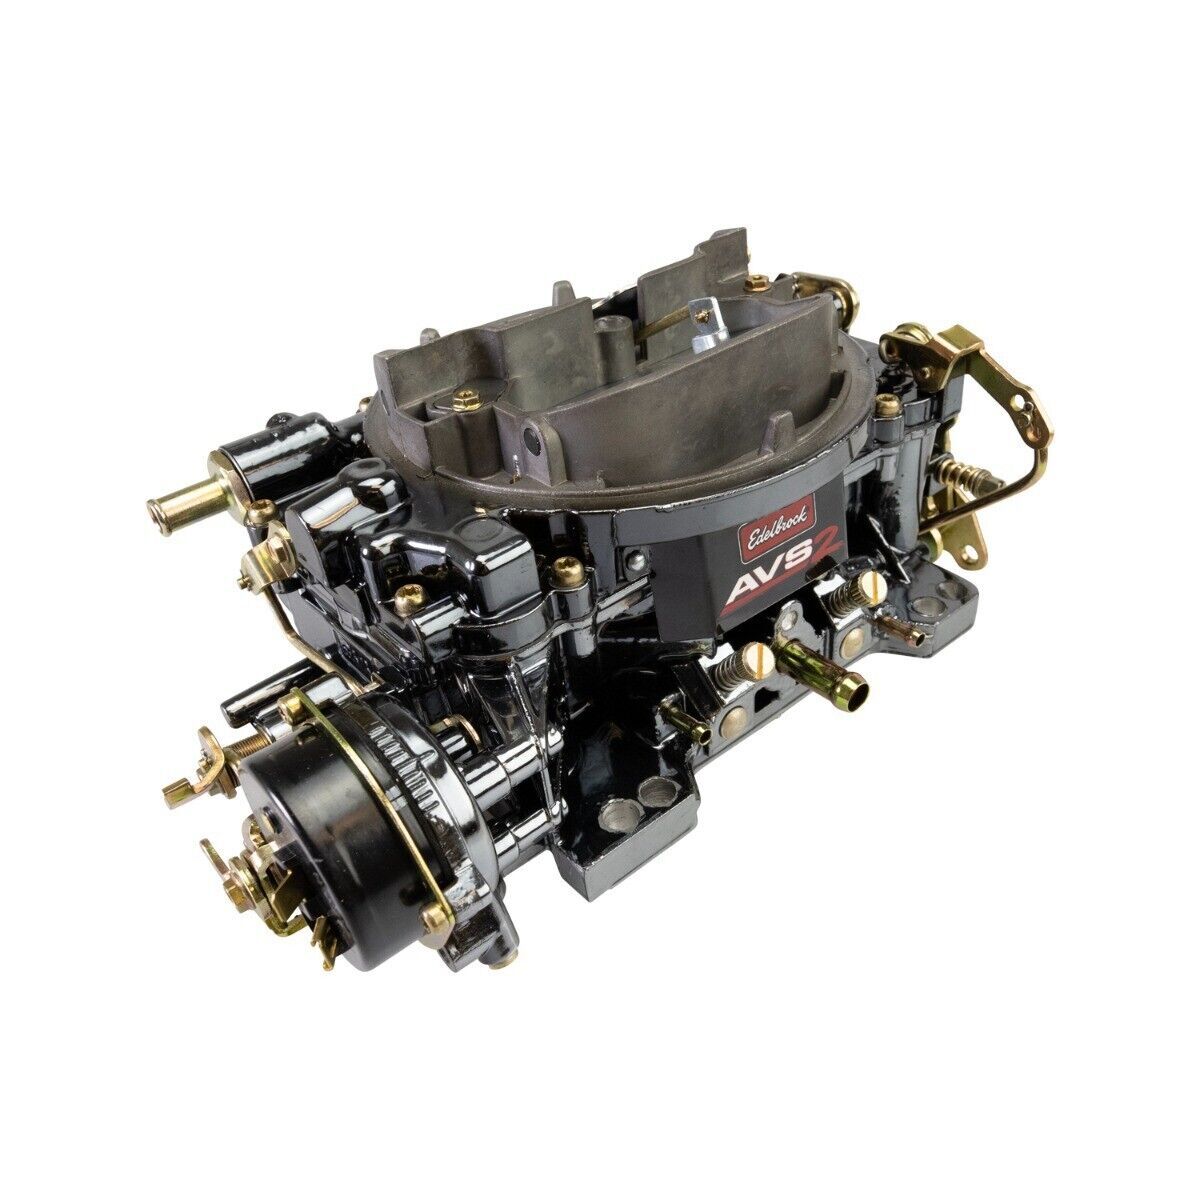 Edelbrock AVS2 Series Carburetor 650cfm Black Plasma Coated # ED1906-BP